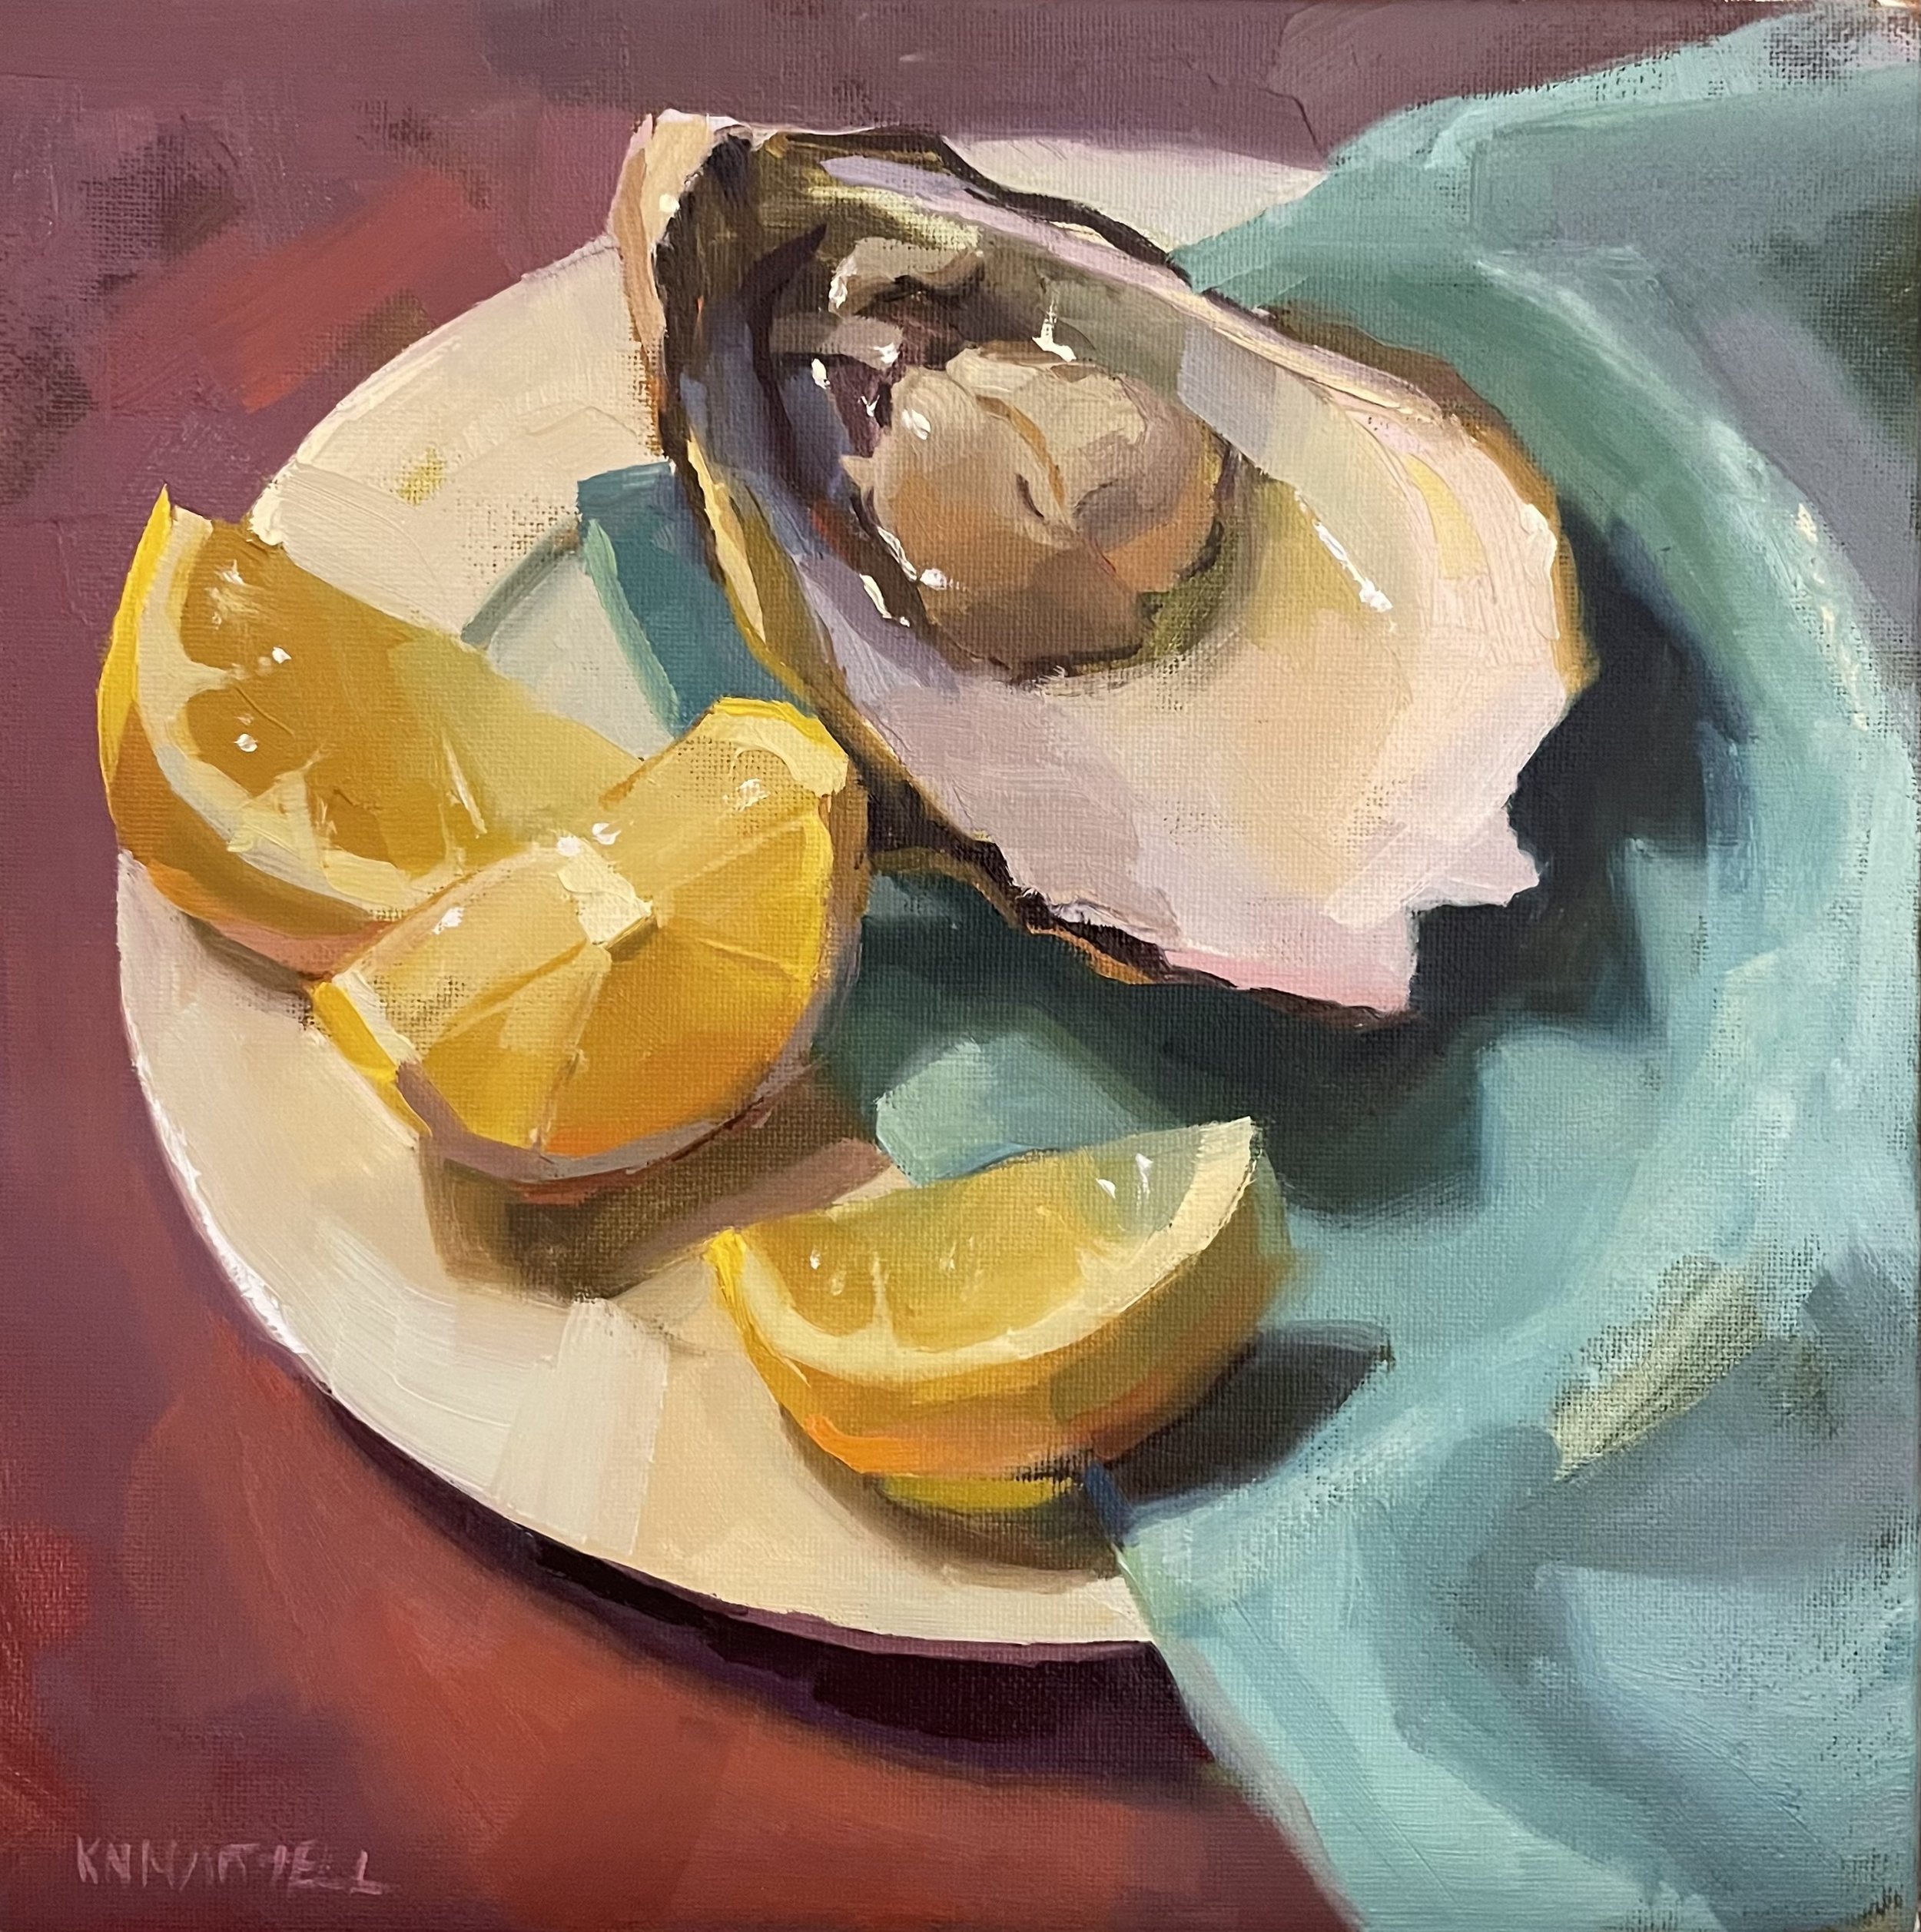 RSMA - Me Little Oyster O' Mine - KMMARTELL - 20x20cm - oil on canvas.jpeg